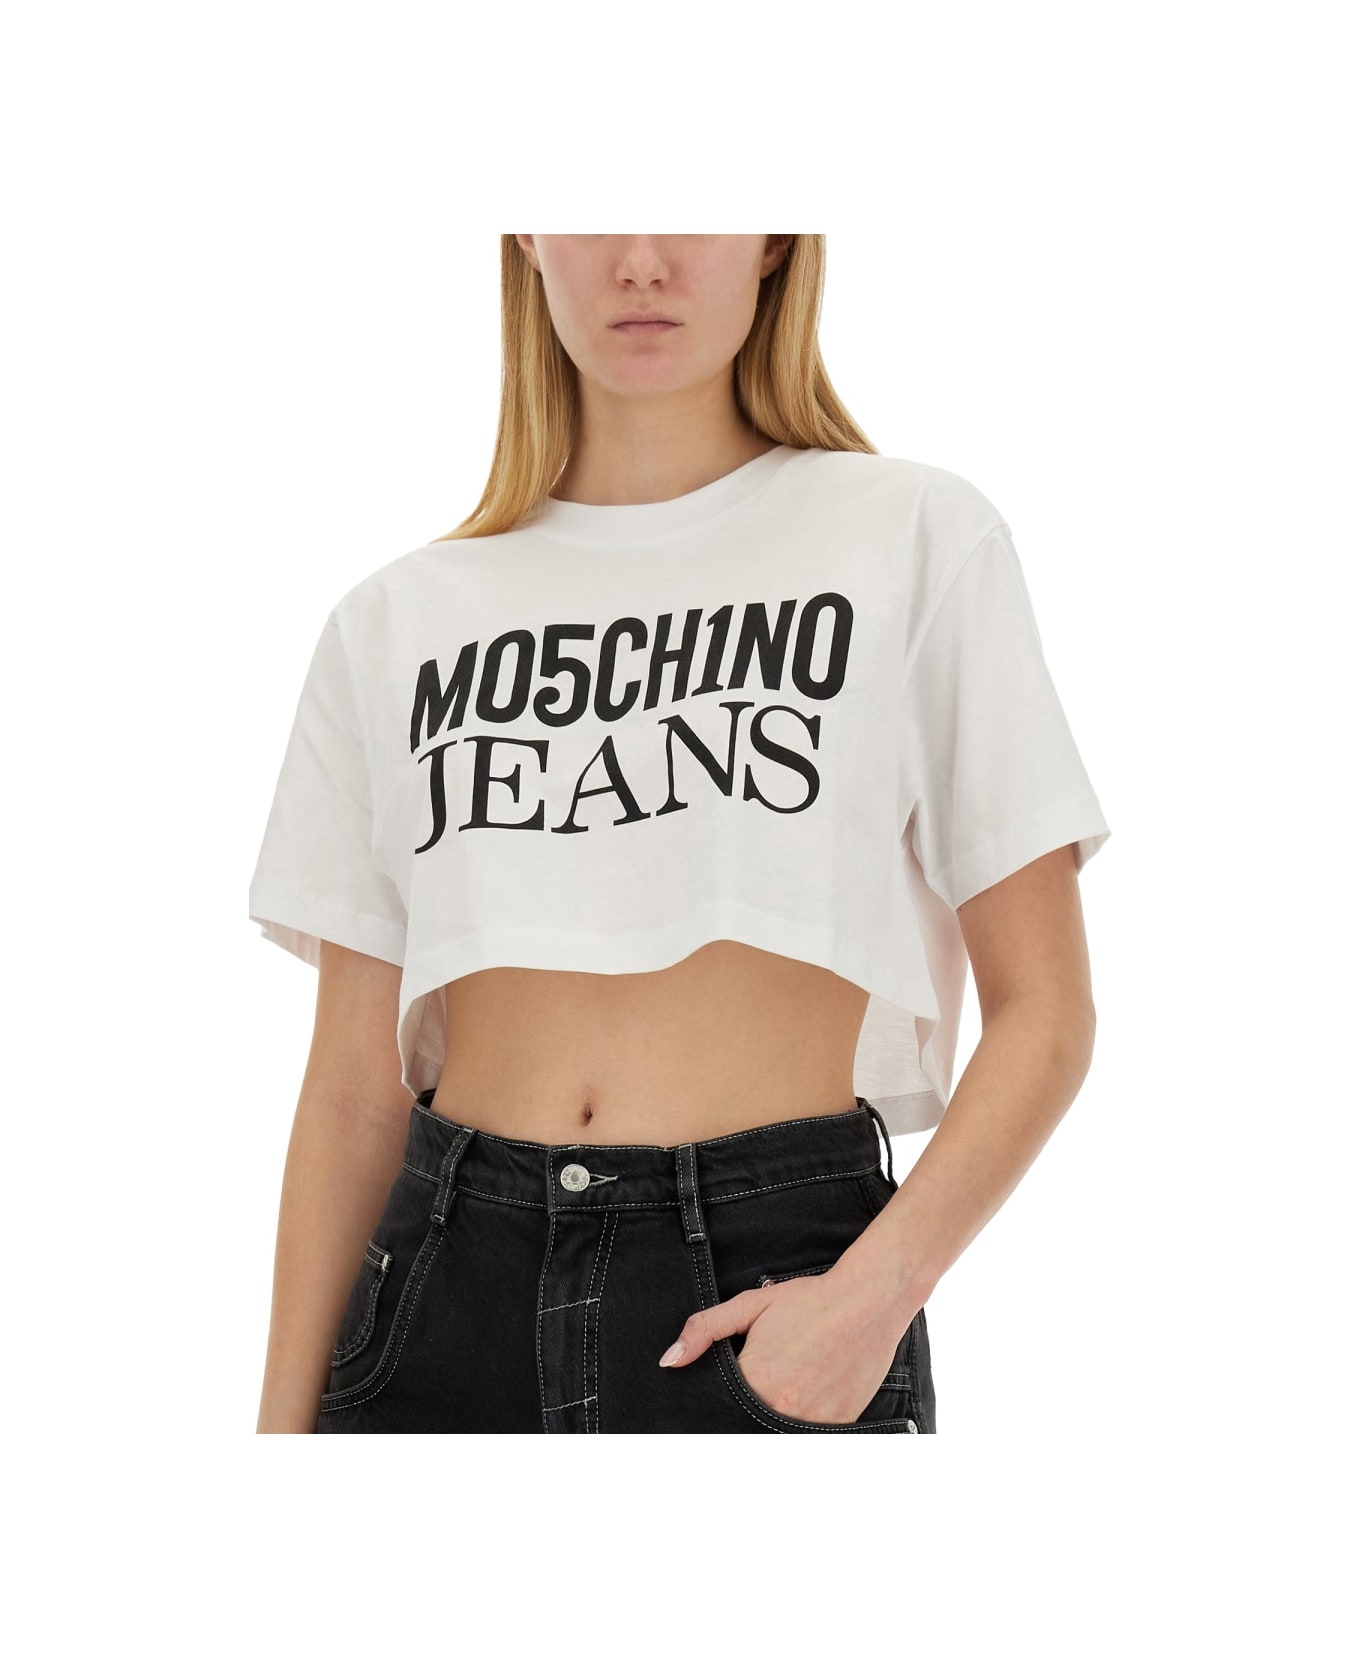 M05CH1N0 Jeans Cropped T-shirt - White